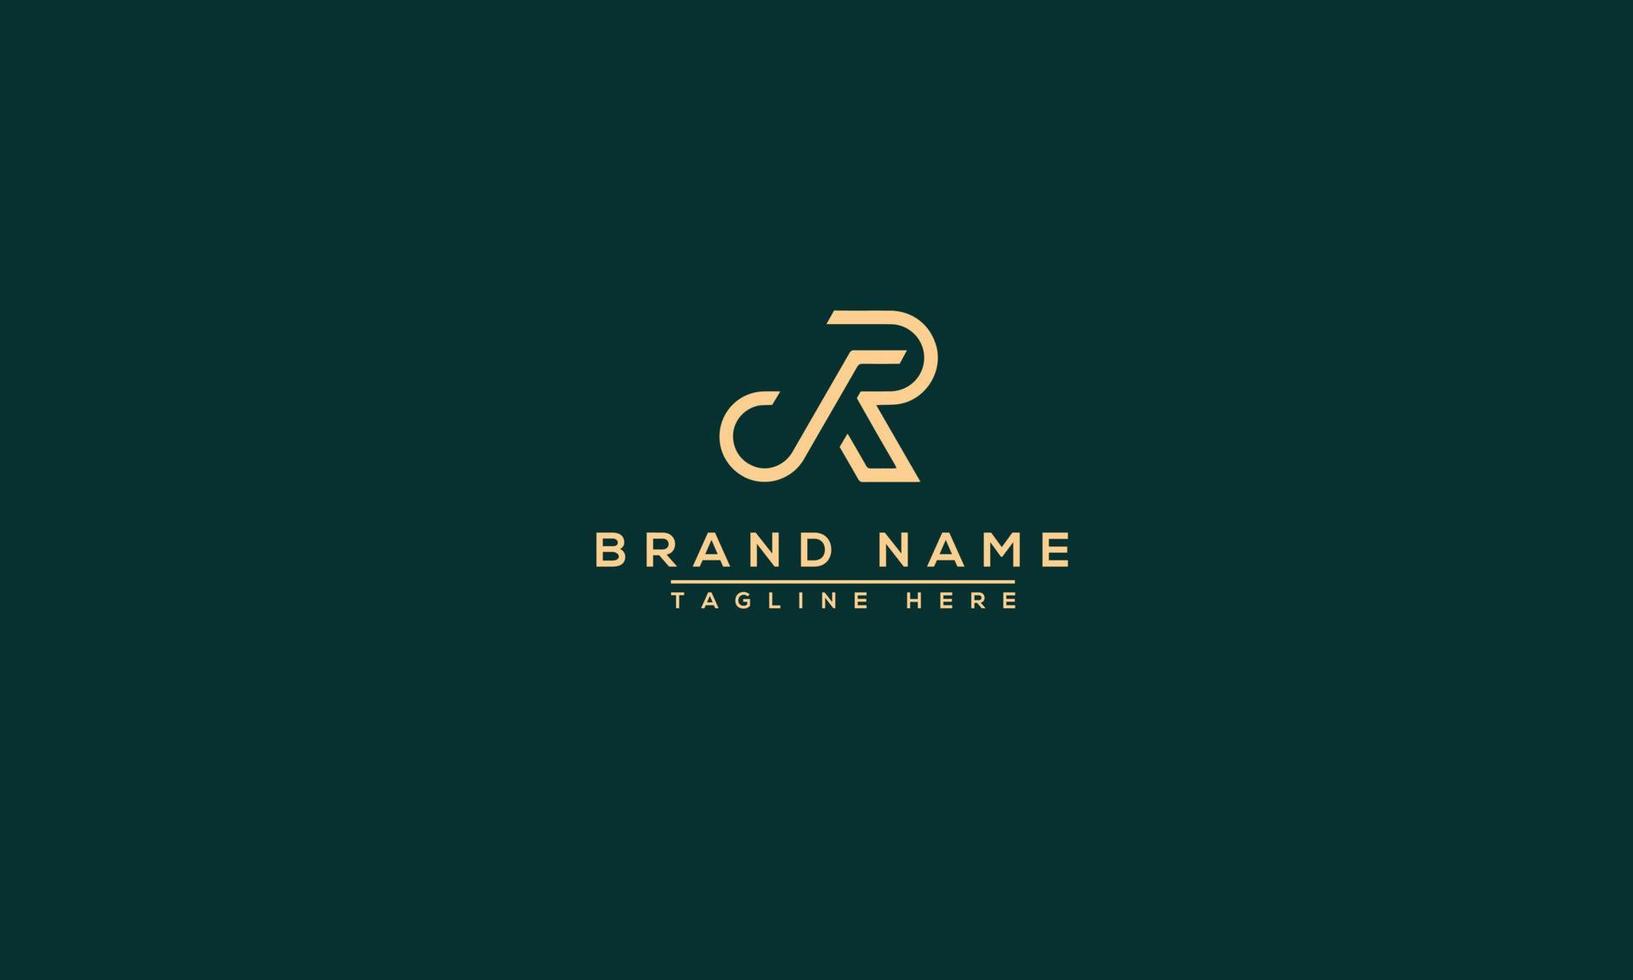 RJ Logo Design Template Vector Graphic Branding Element.